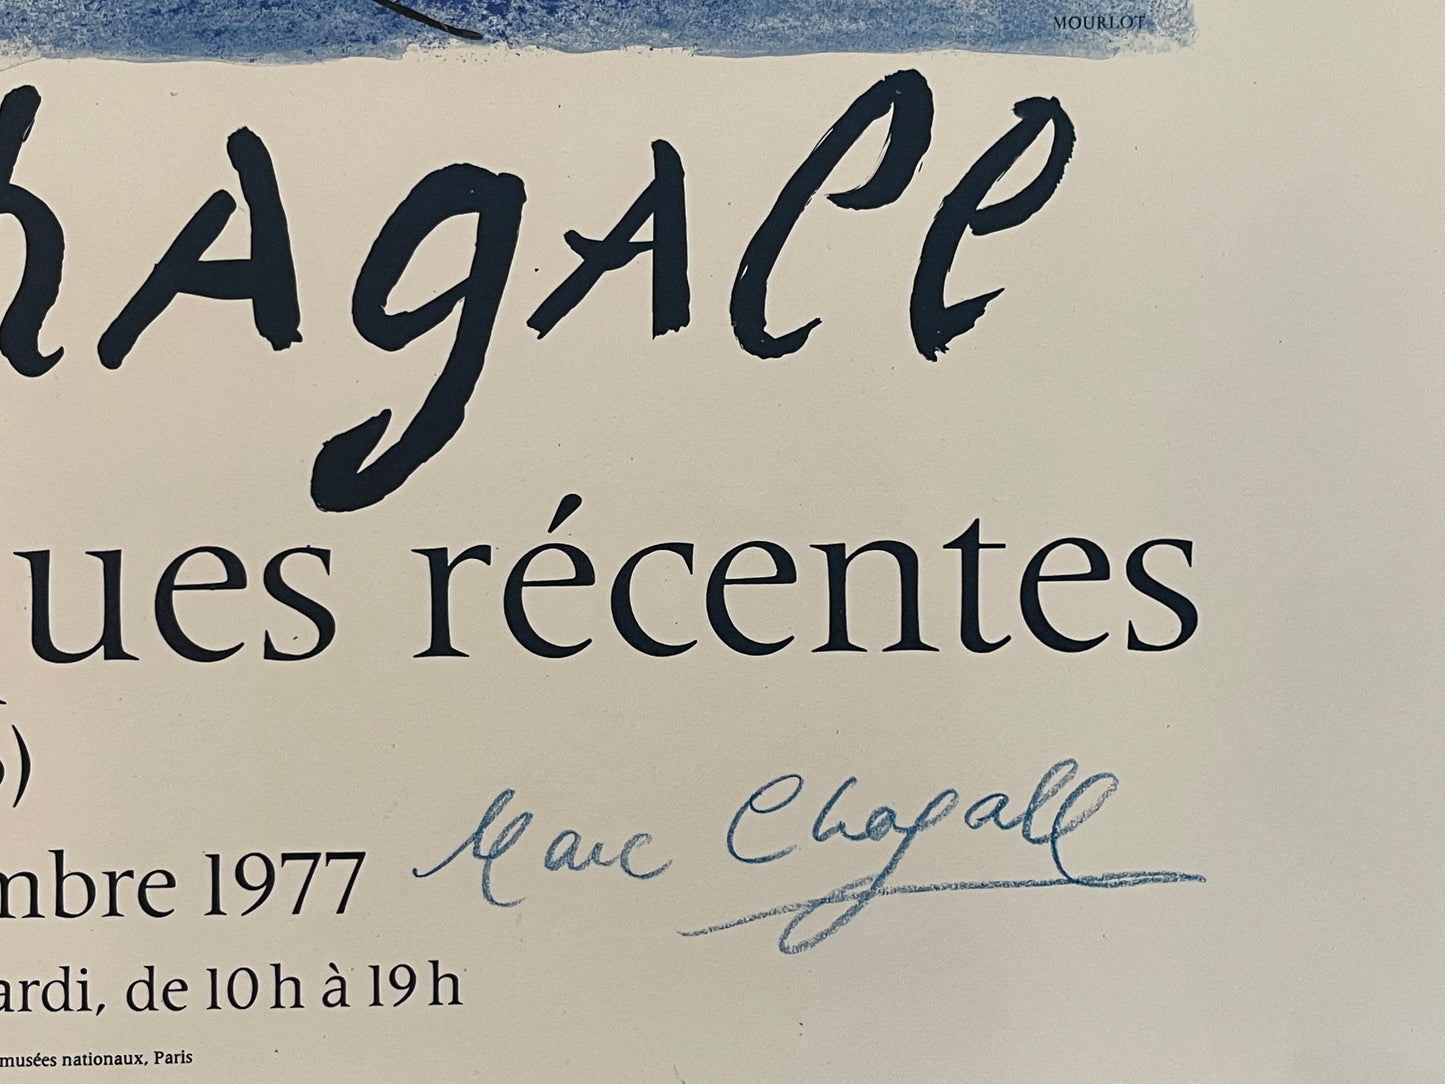 Signed Marc Chagall Peintures Bibliques Re'centes (1966-1967)